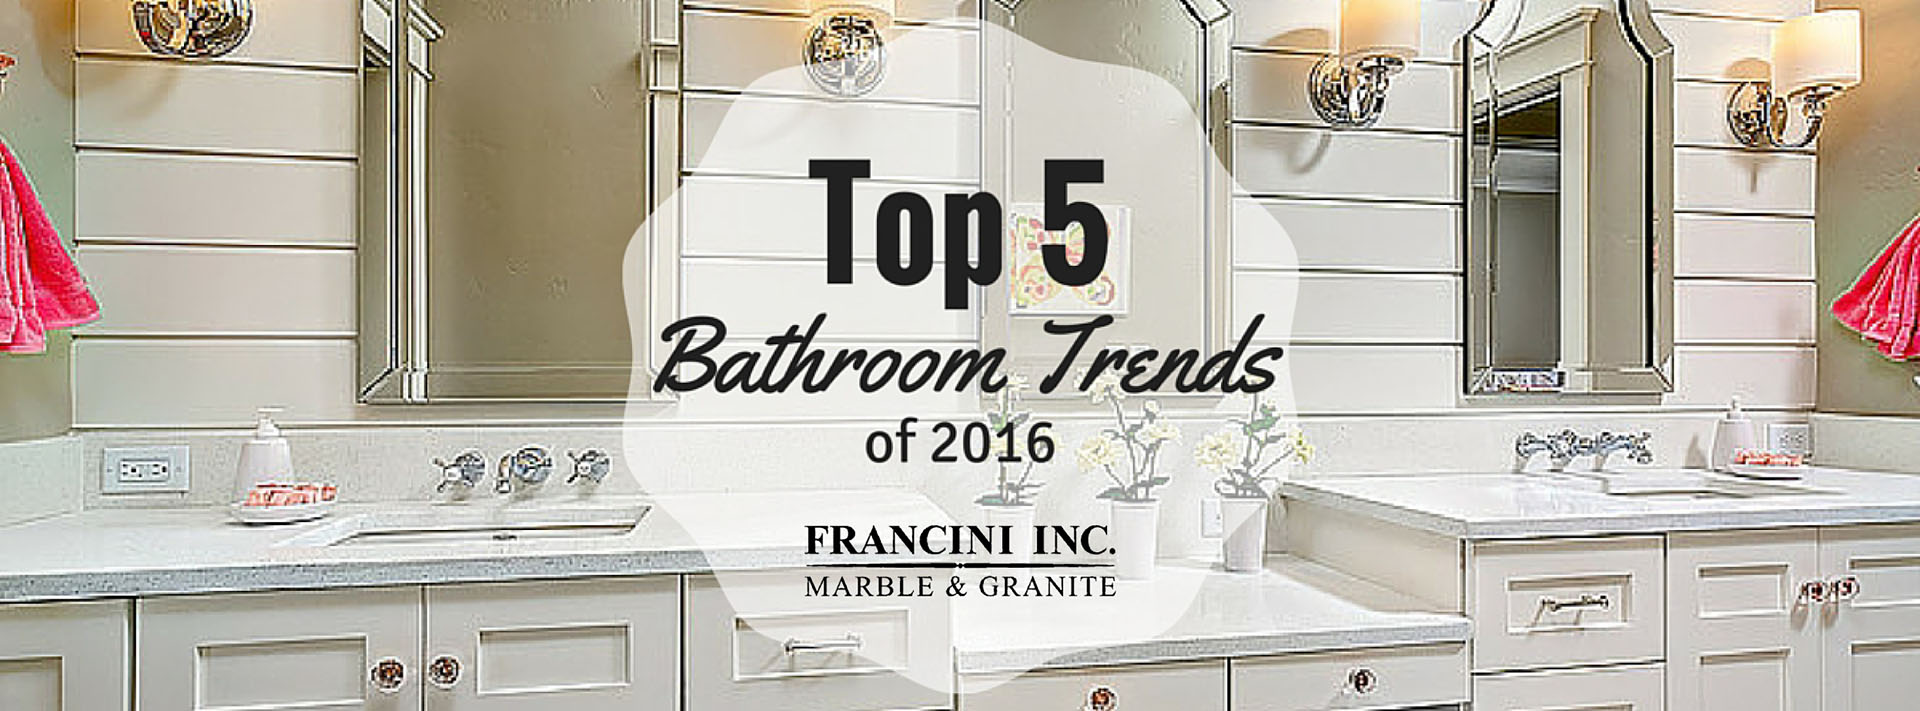 Top 5 Bathroom Trends for 2016